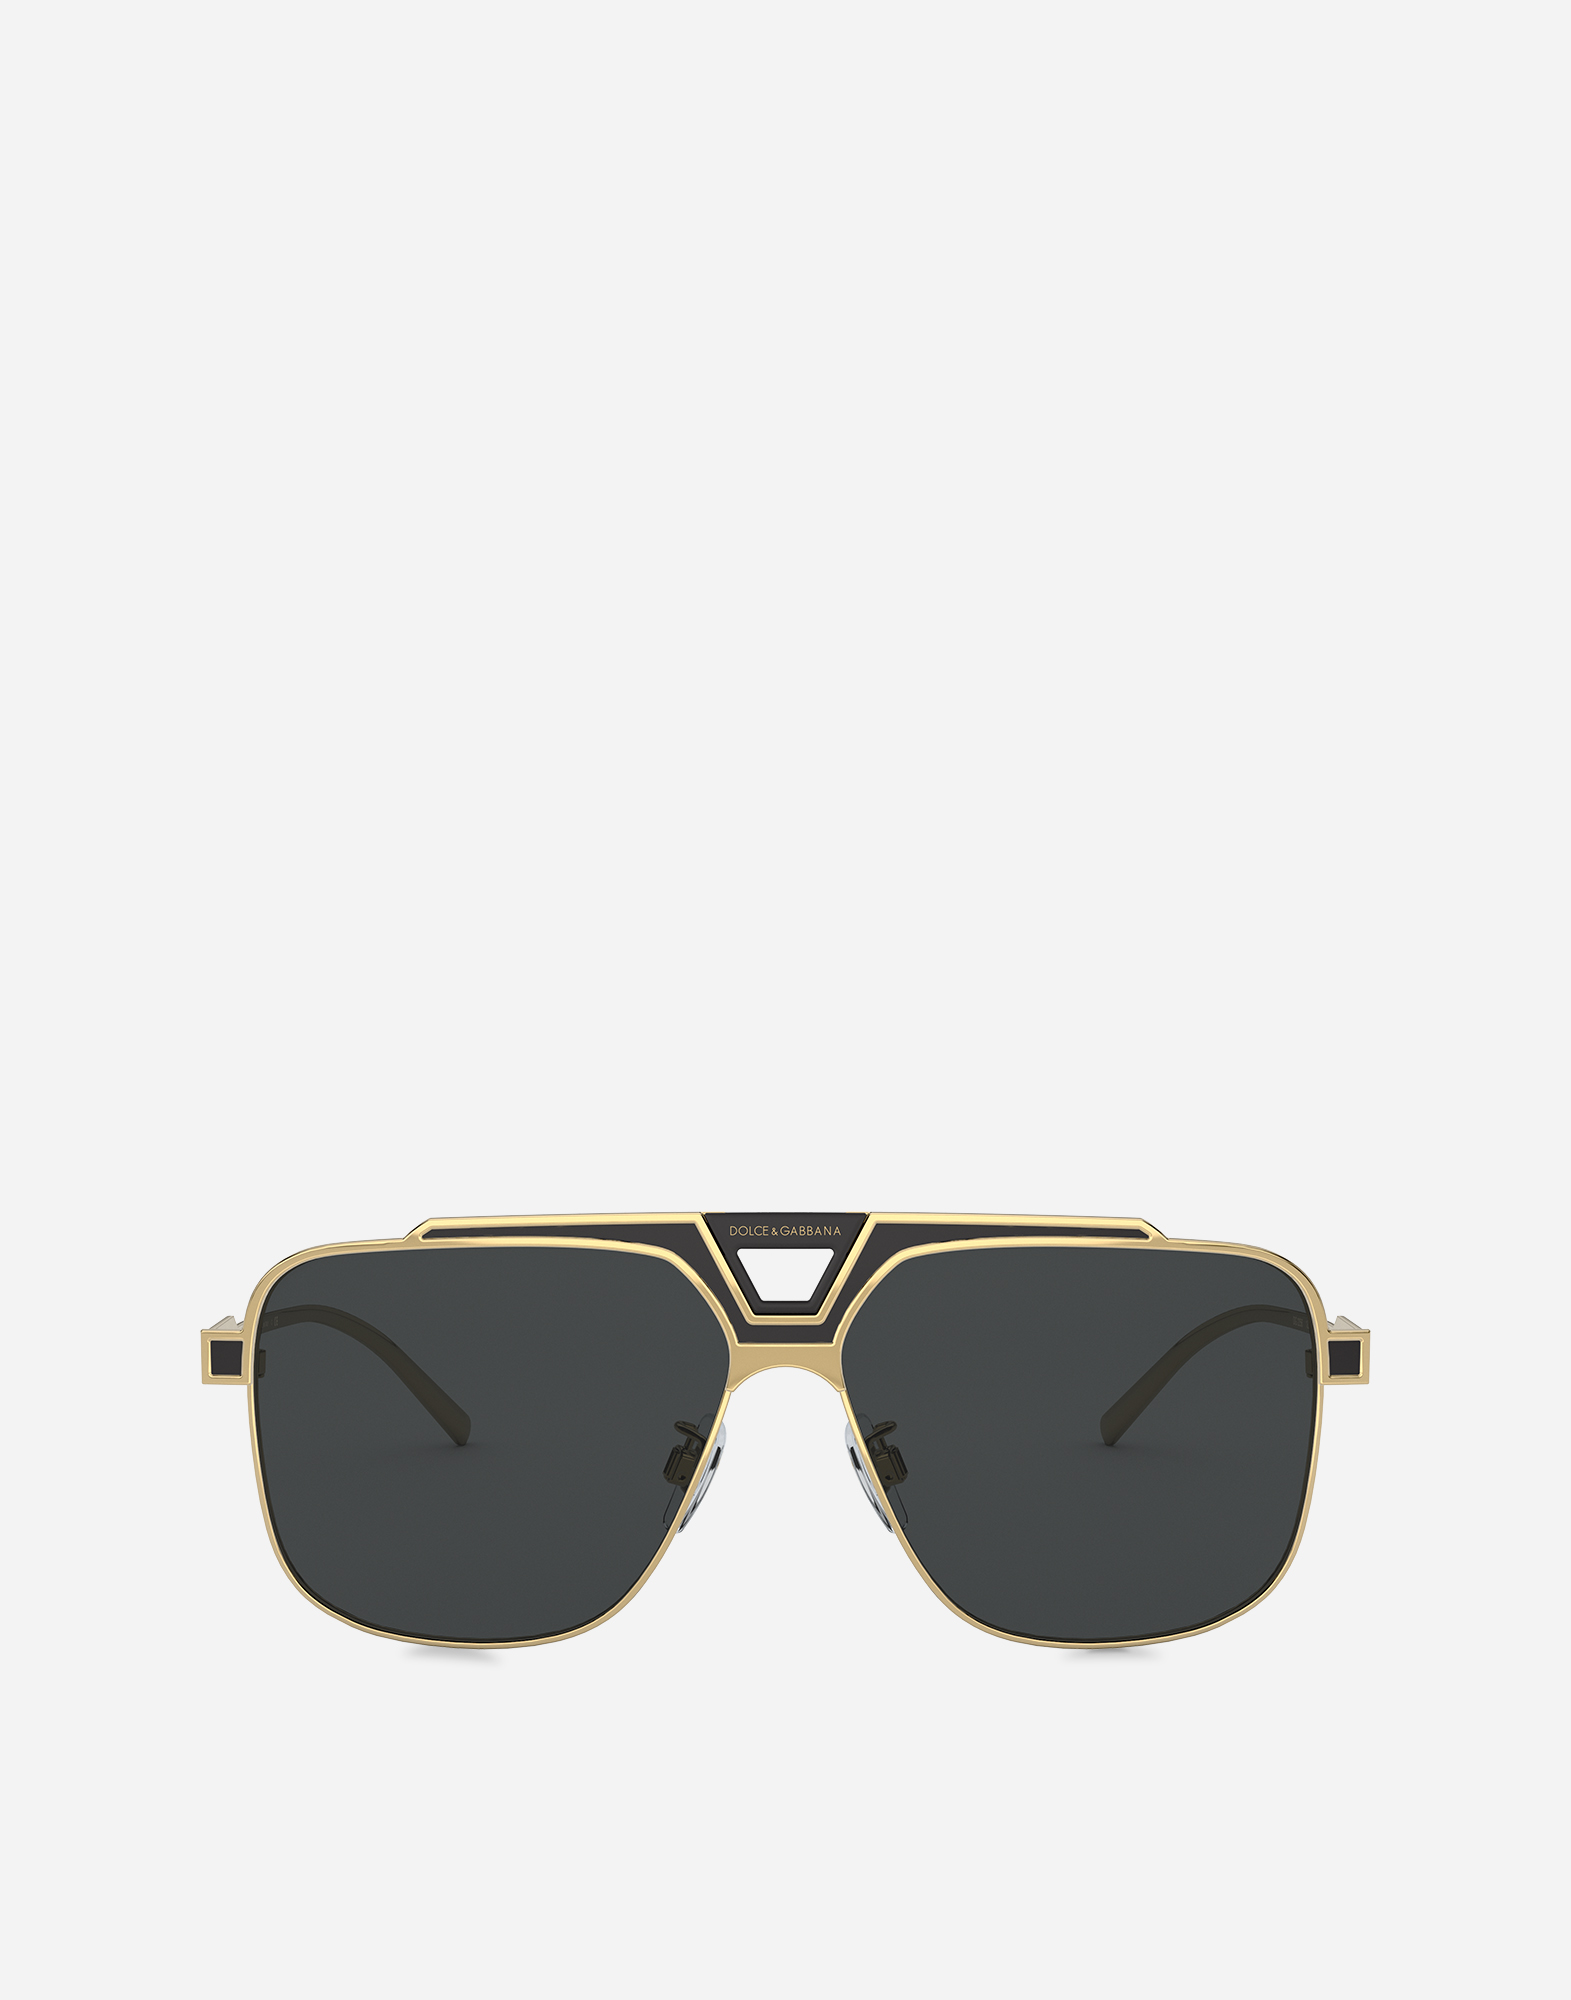 dolce and gabbana sunglasses mens price